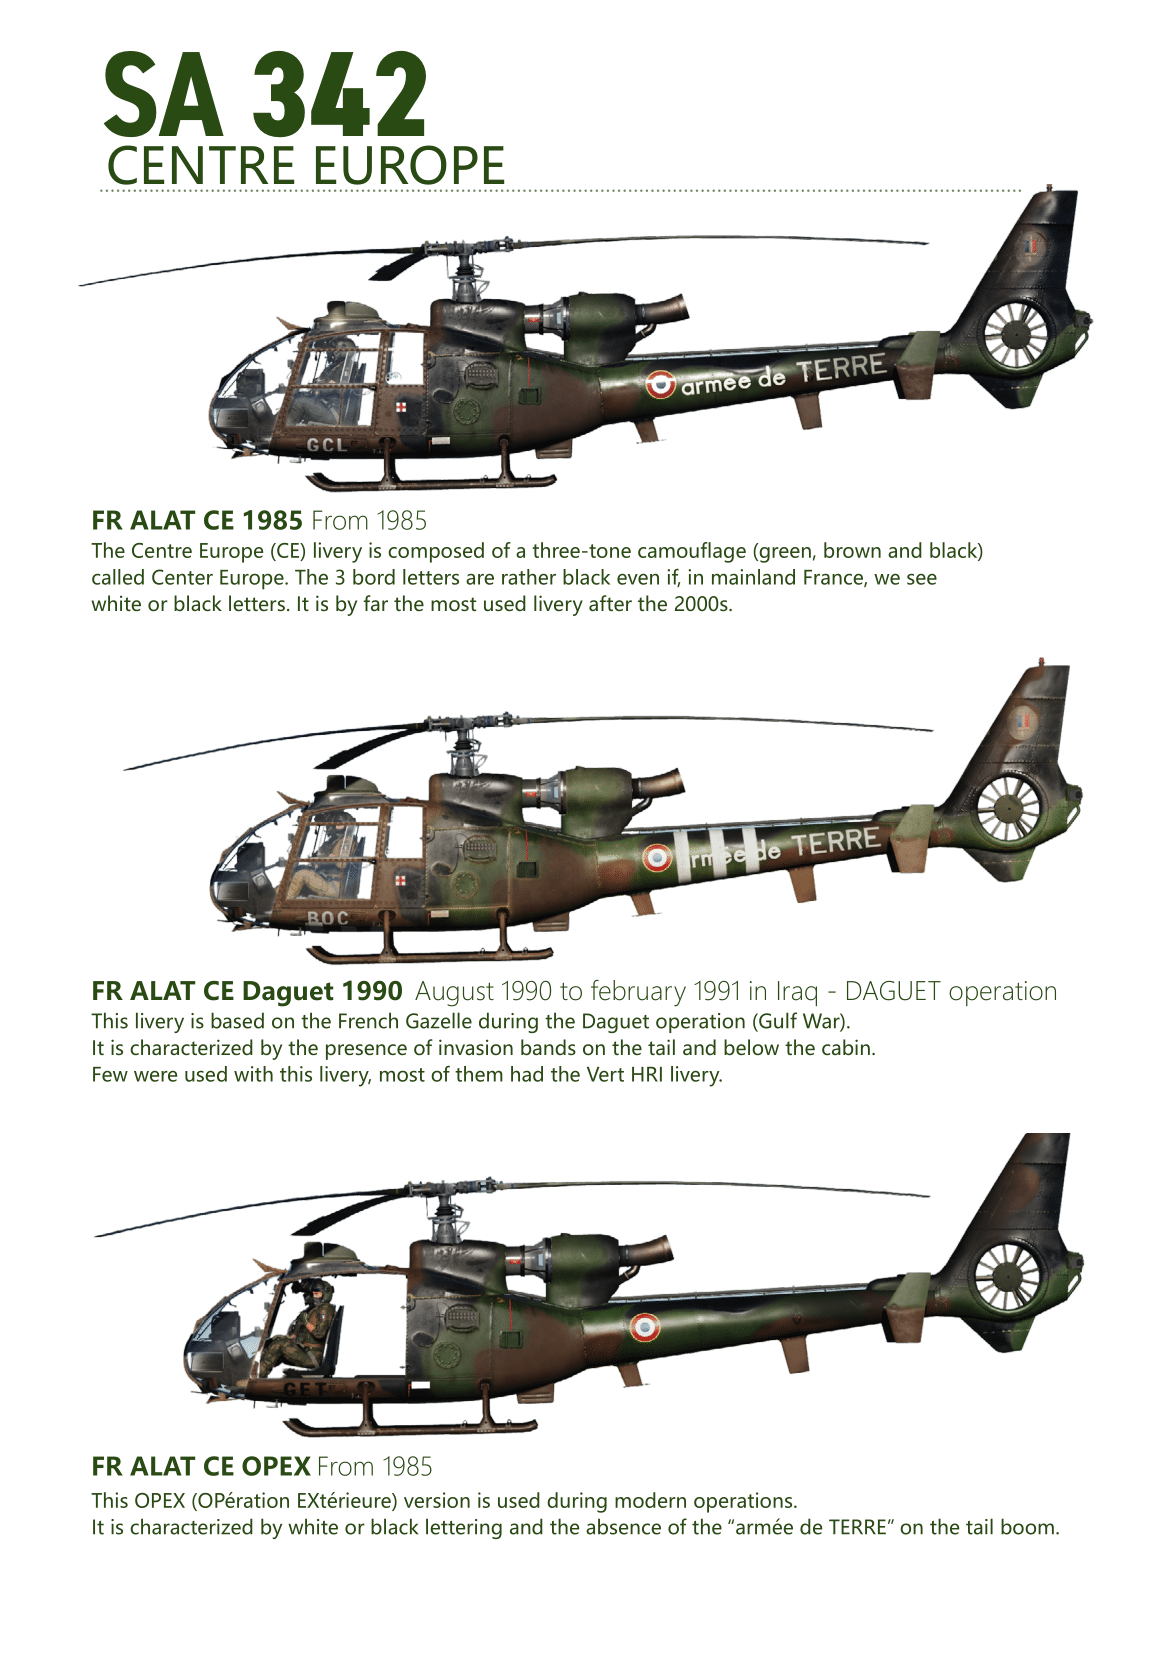 OH-17A Blue Thunder Skin for the SA342 Gazelle